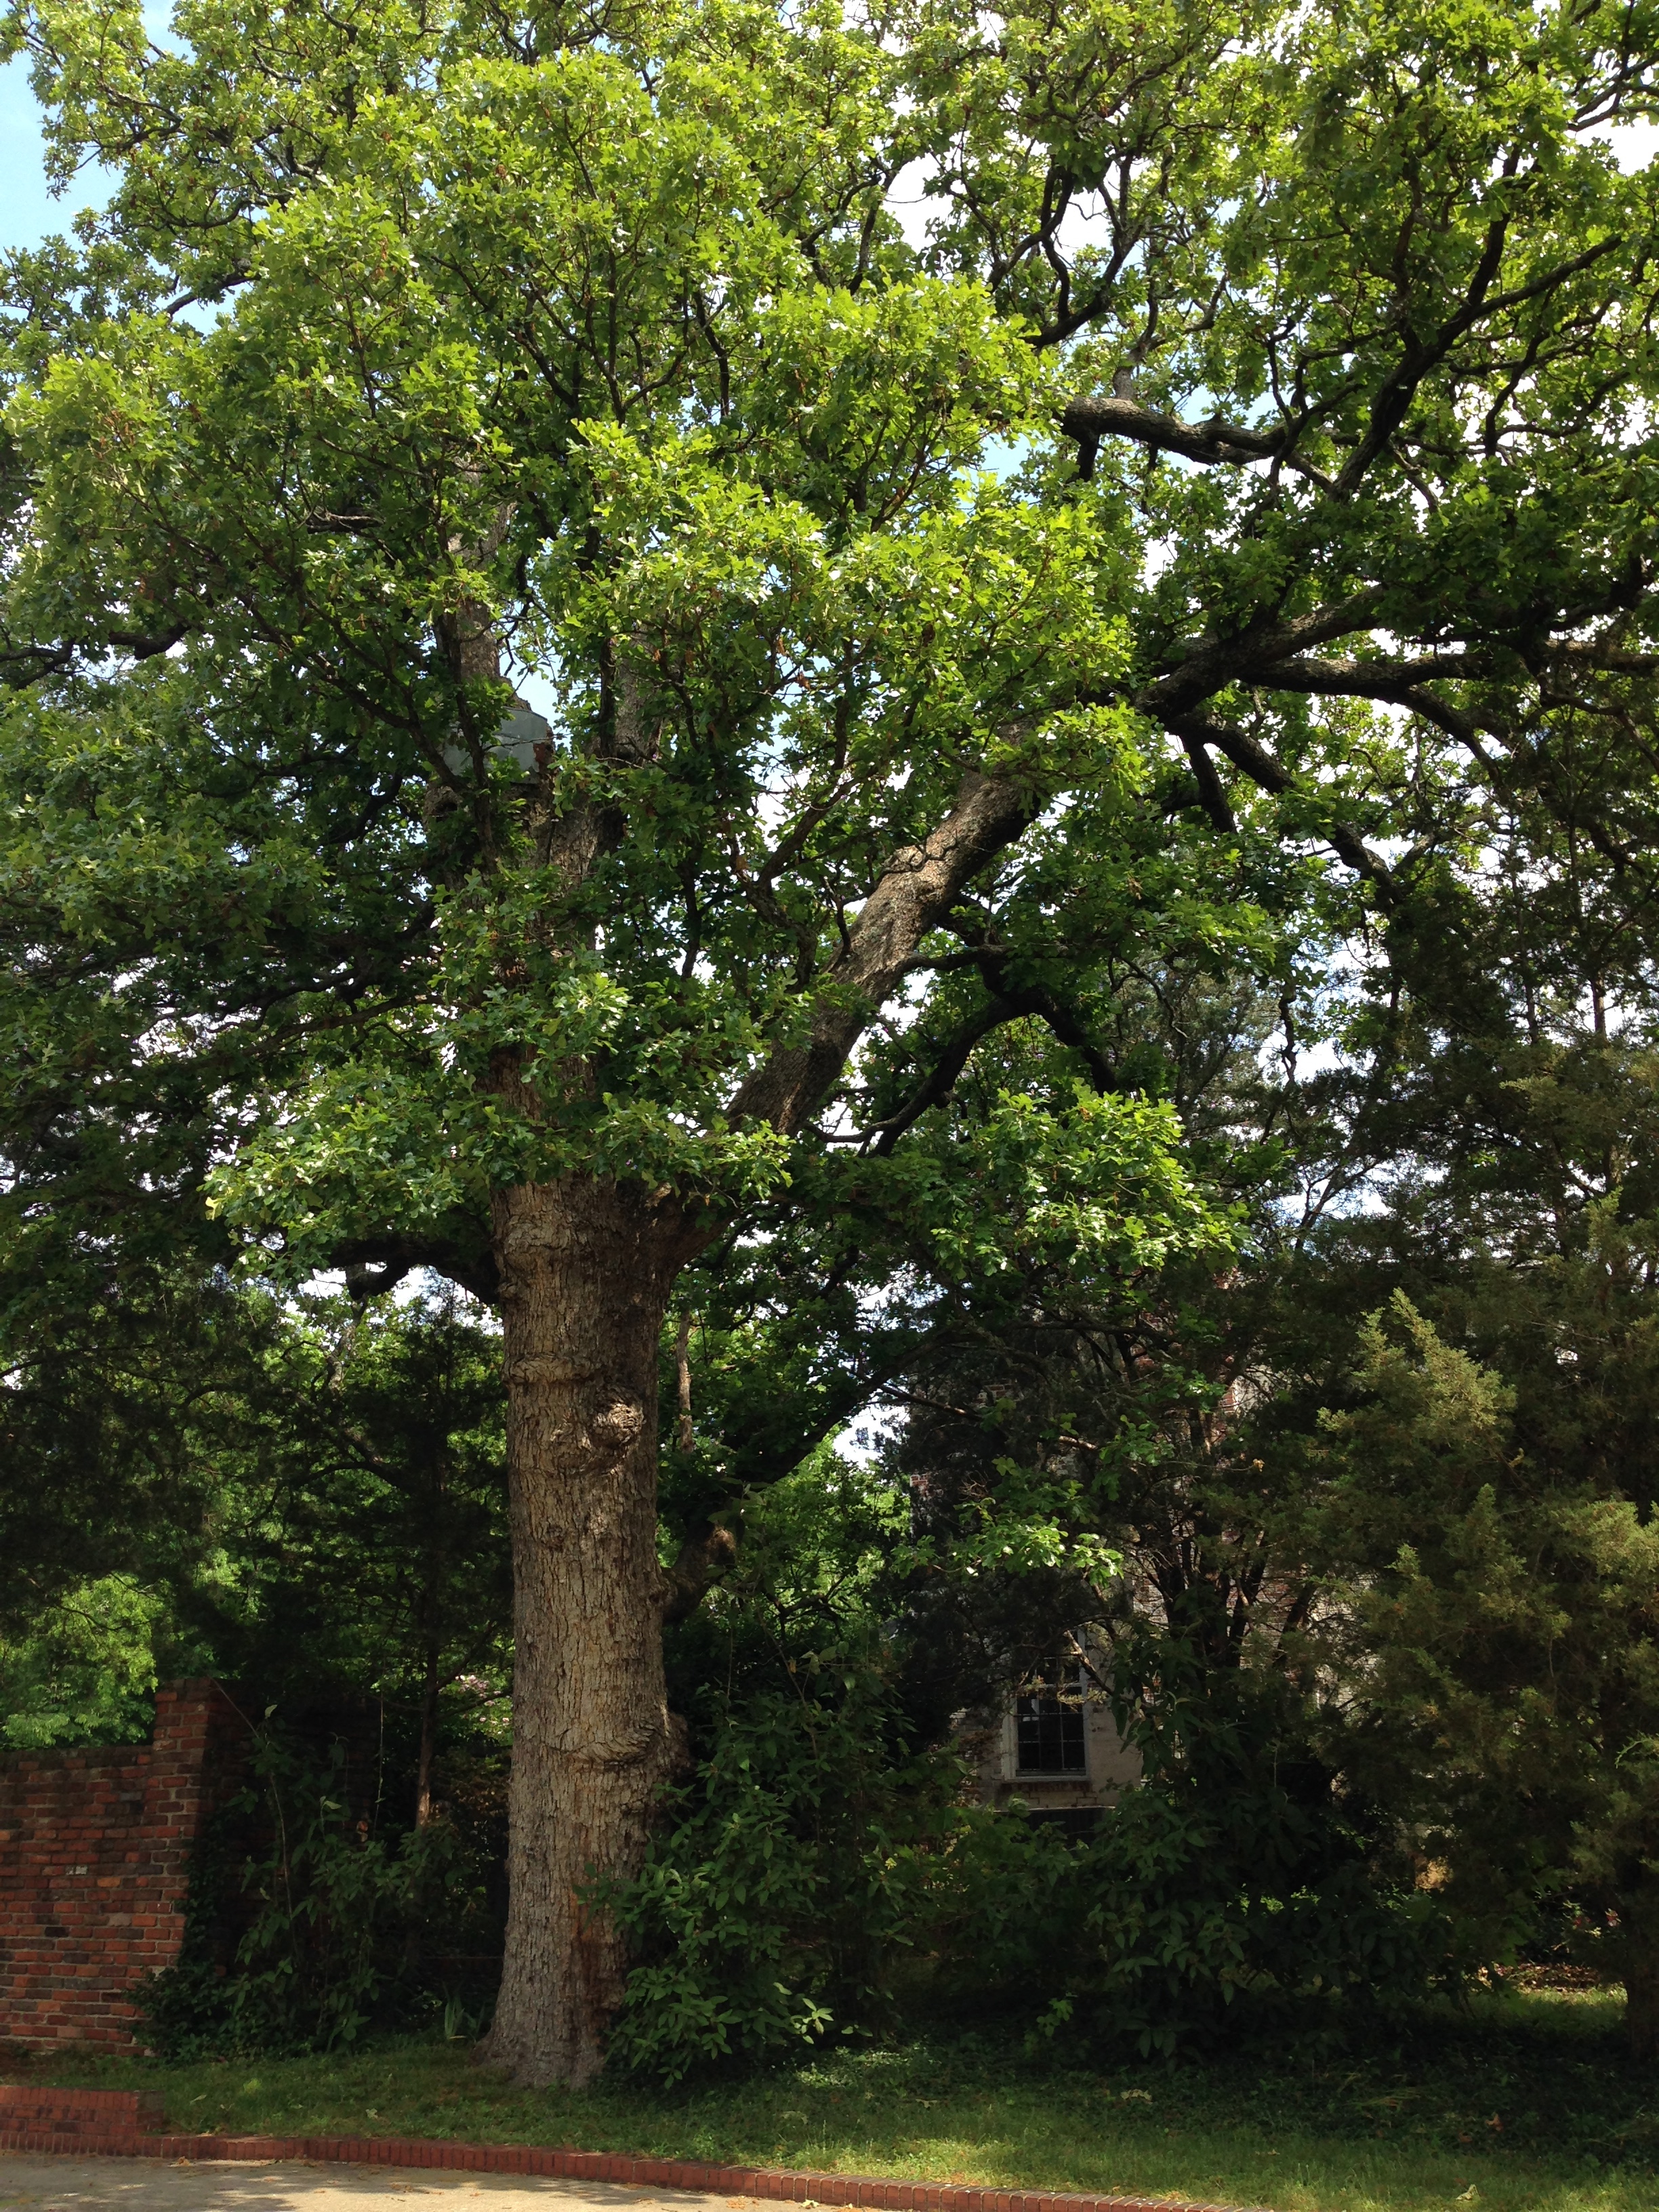 Post Oak (Quercus stellata)